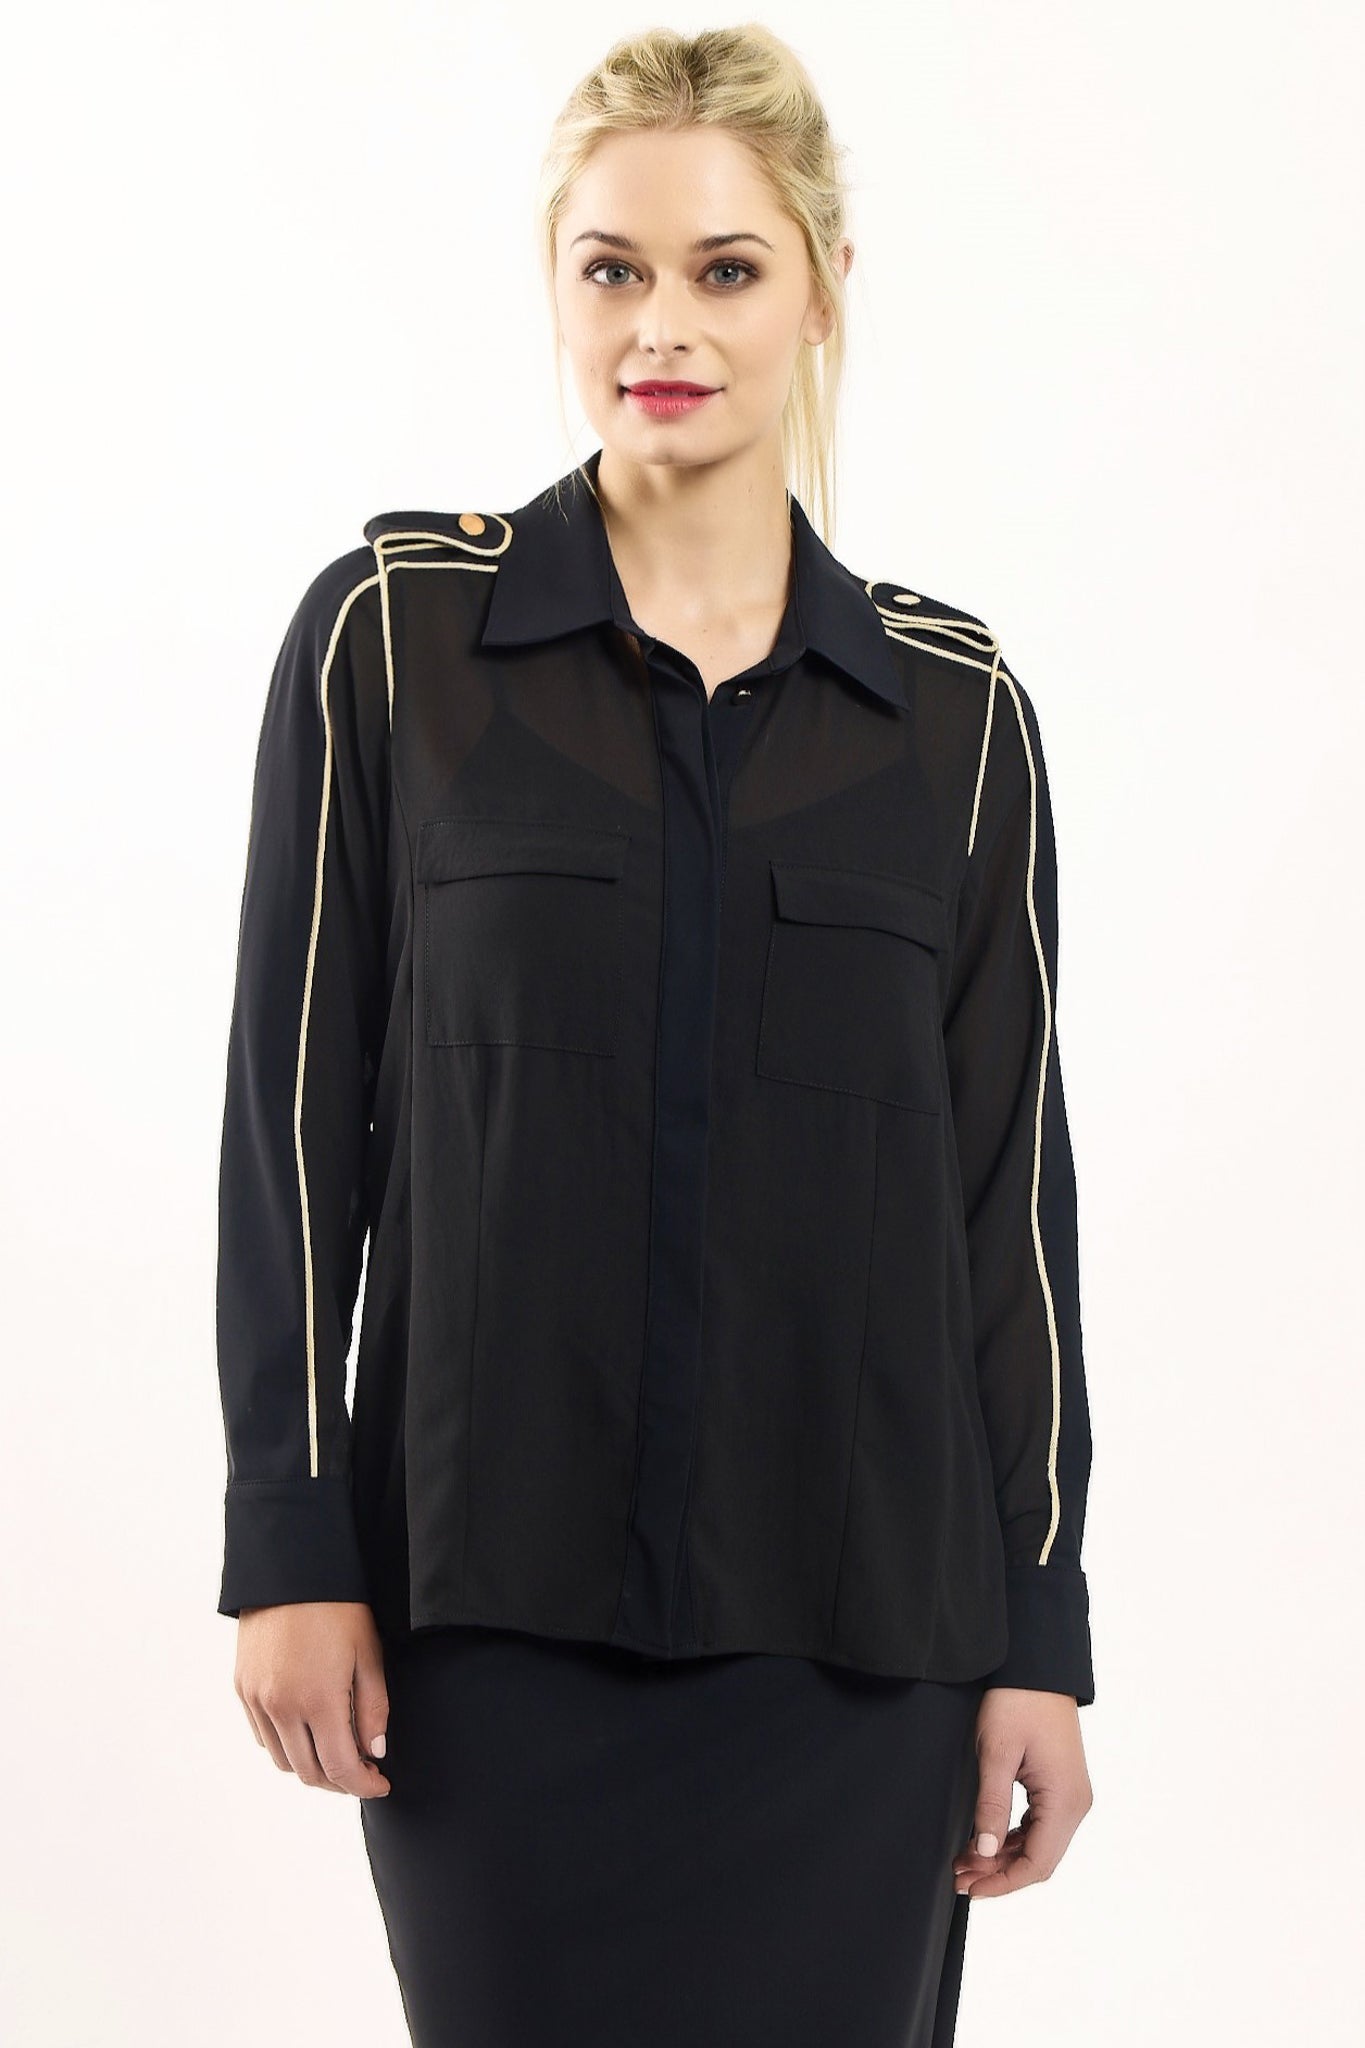 PAULA RYAN Official Panelled Shirt - Black/Gold - PRE ORDER - Paula Ryan